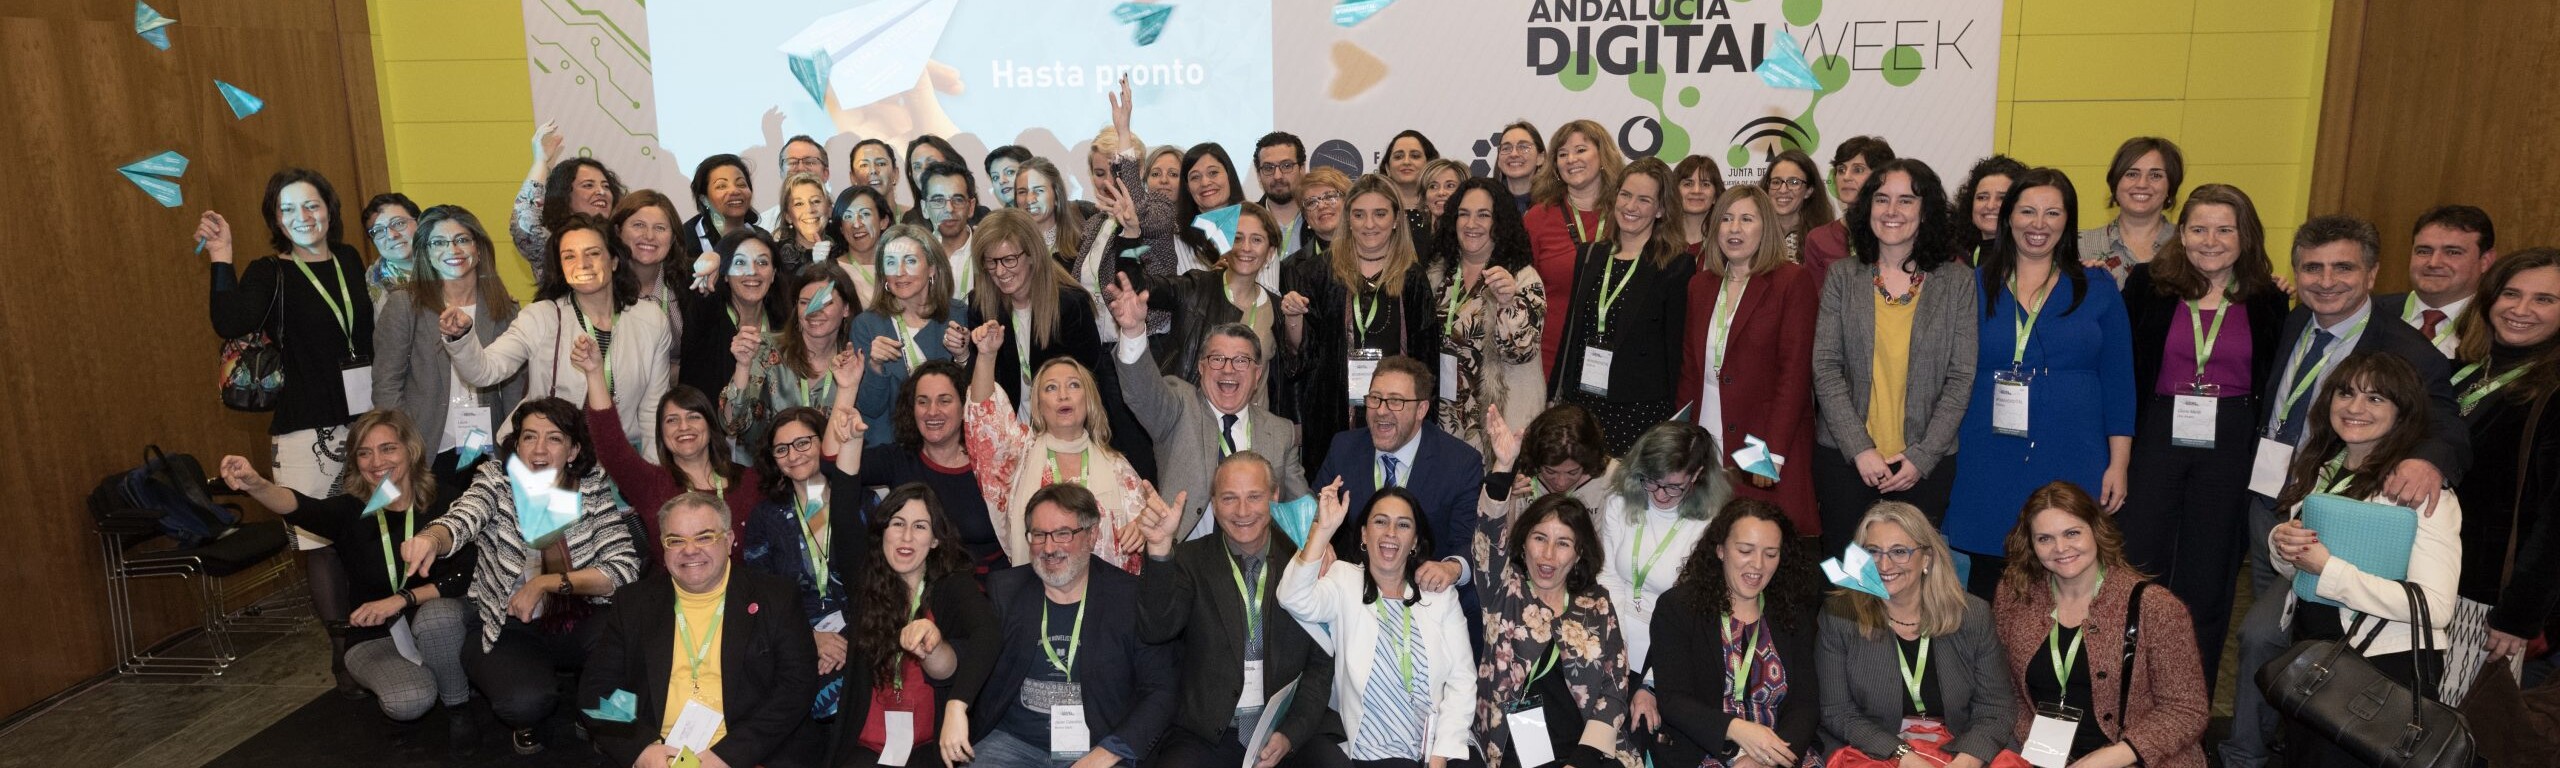 Participantes de la Jornada Womandigital posando ante un photocall del evento Andalucia Digital Week